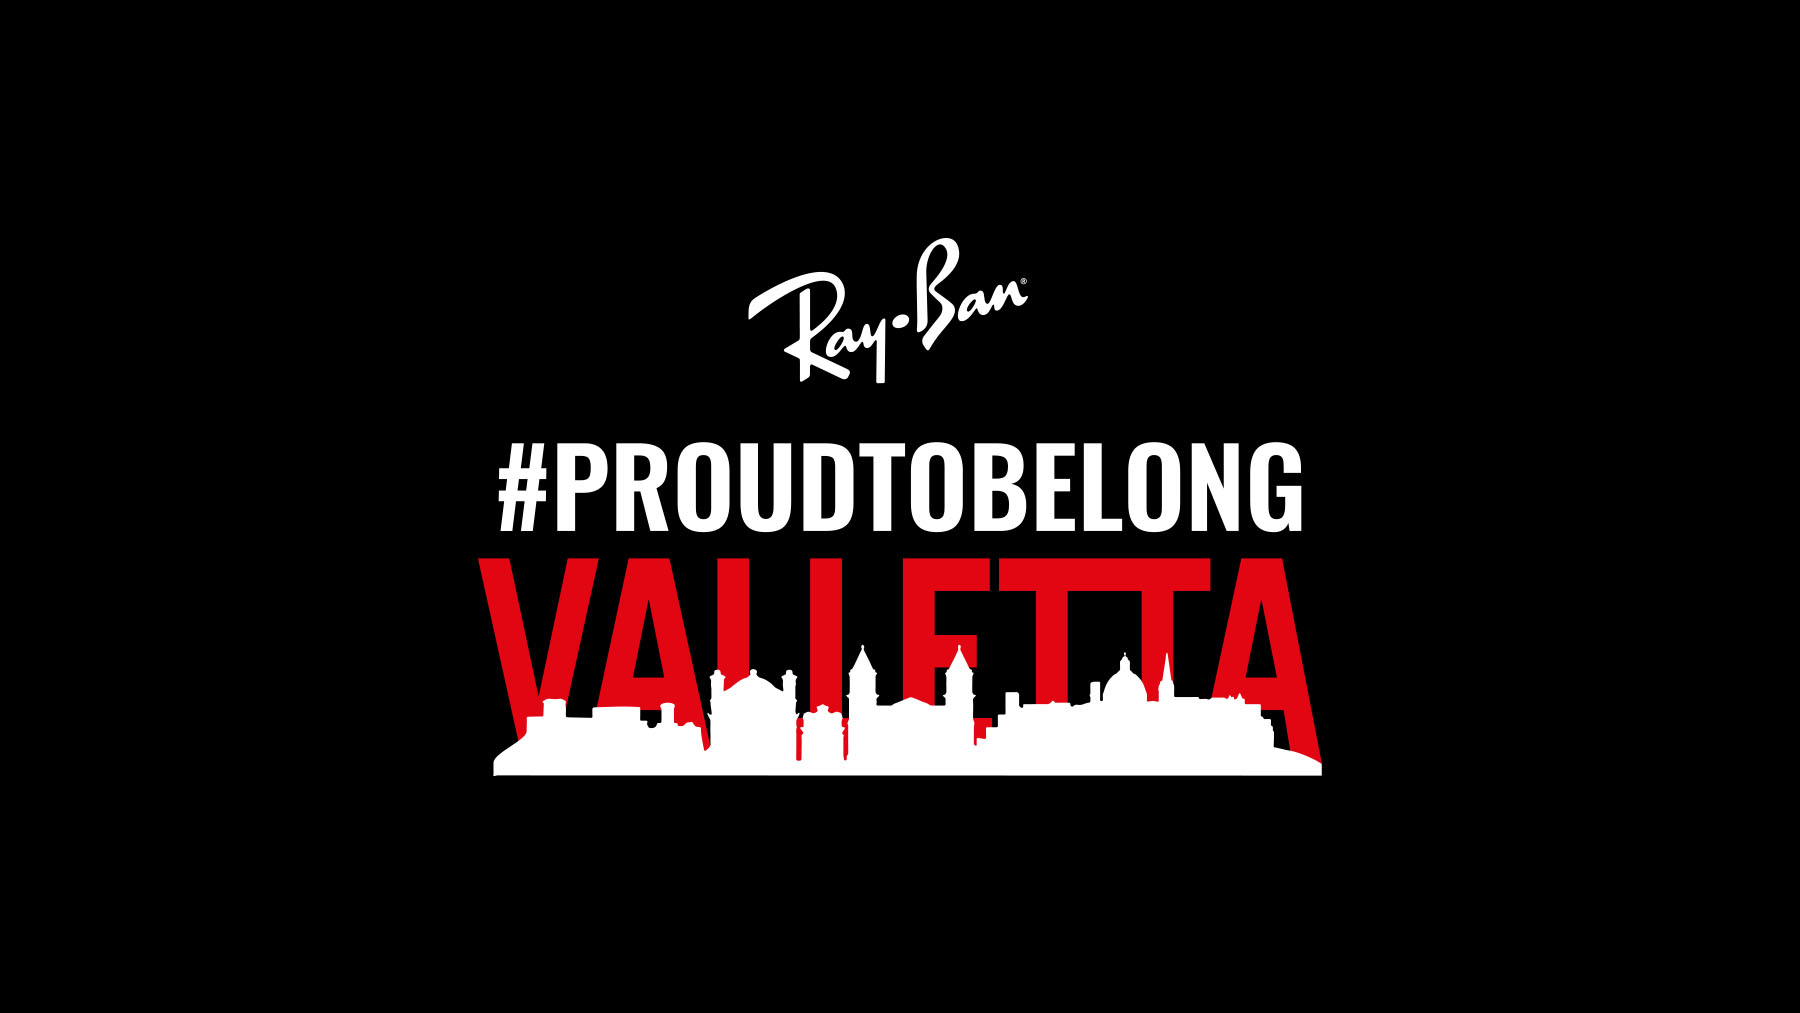 ray_ban_valletta_logo